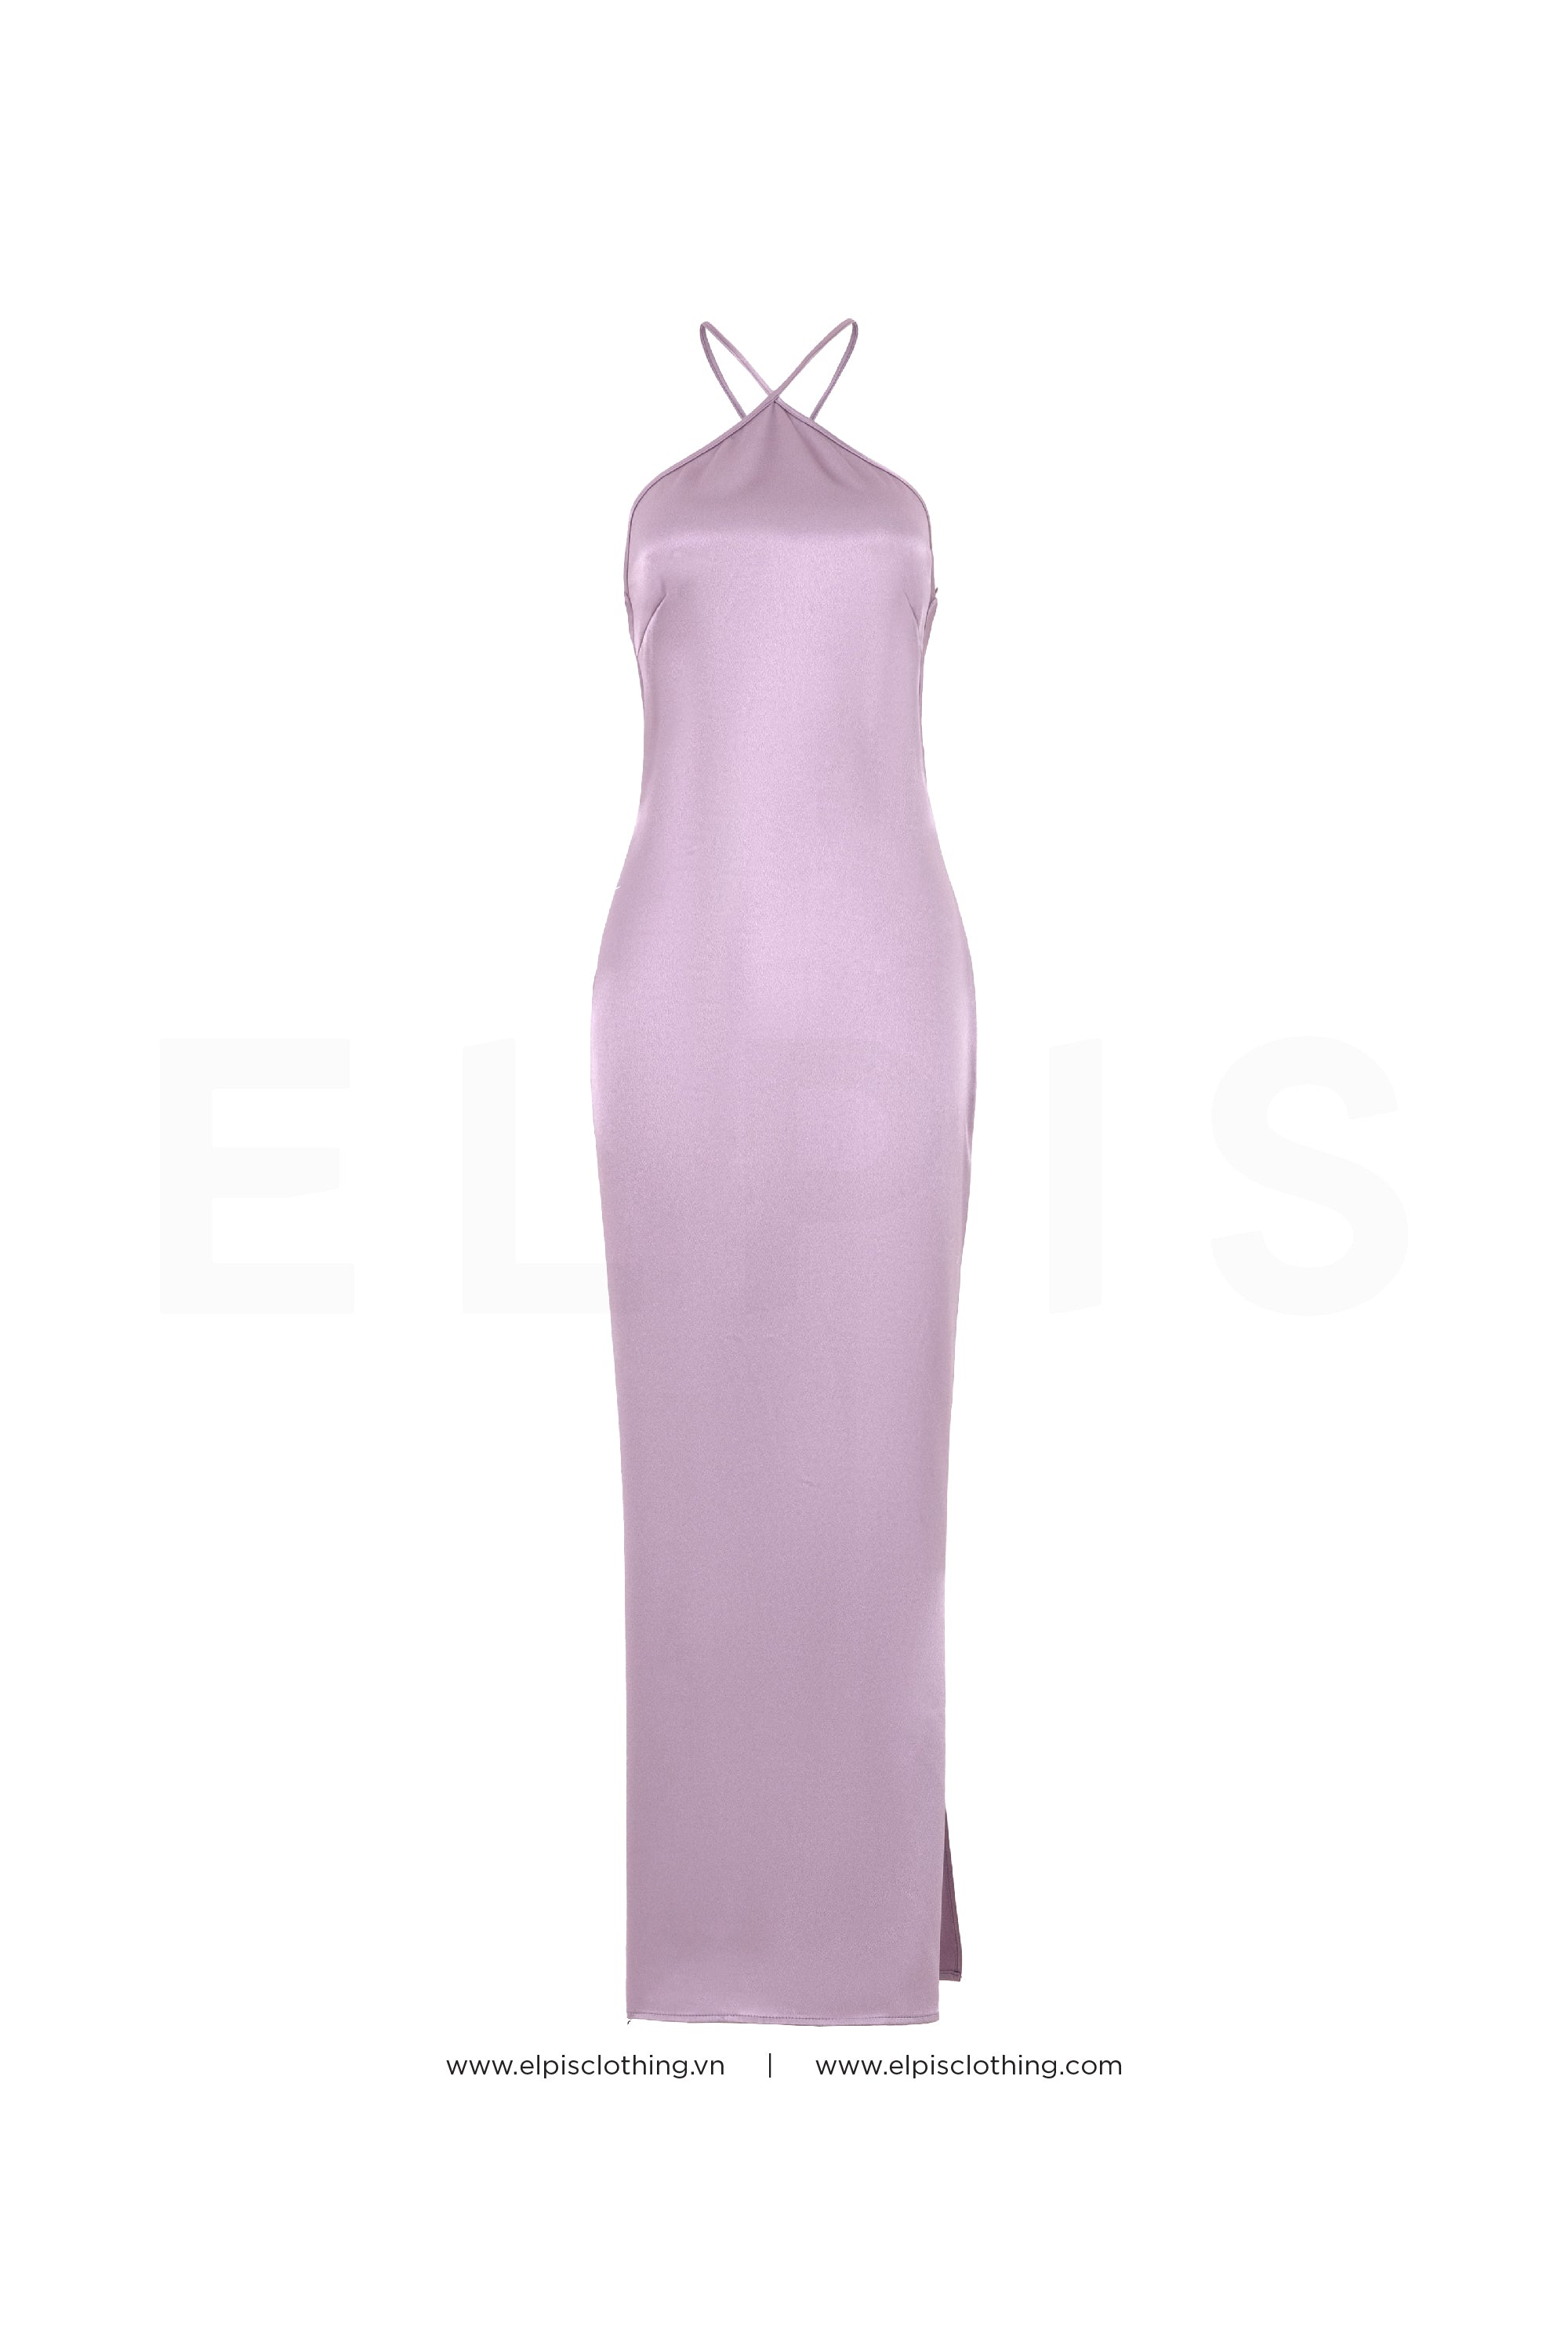 silk body dress featuring halter neck open back | EL23D79